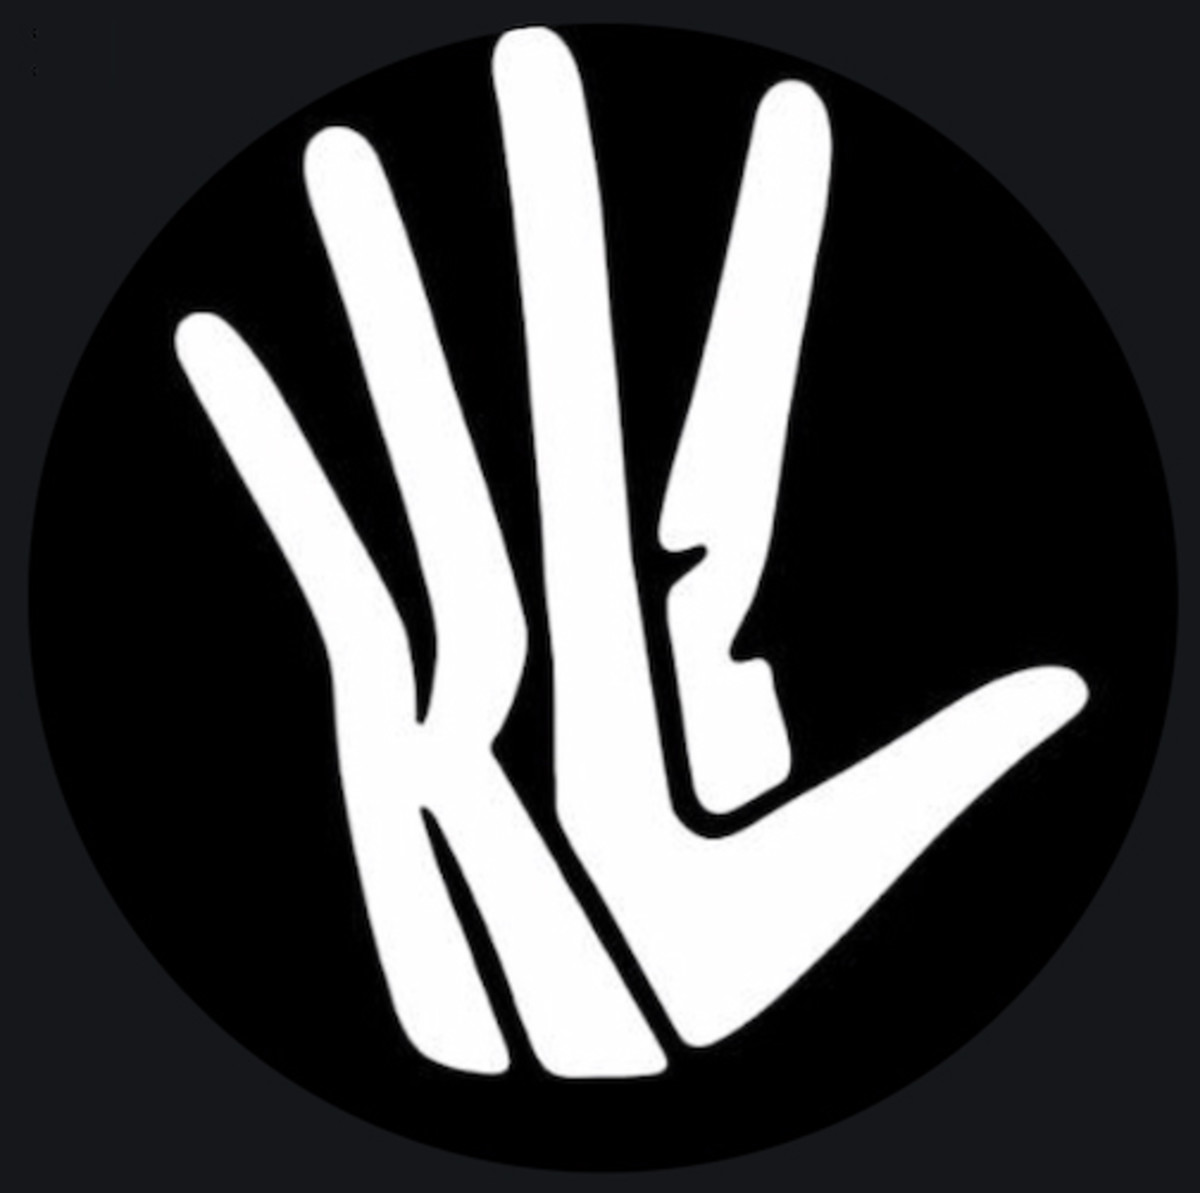 kawhi leonard shoe logo